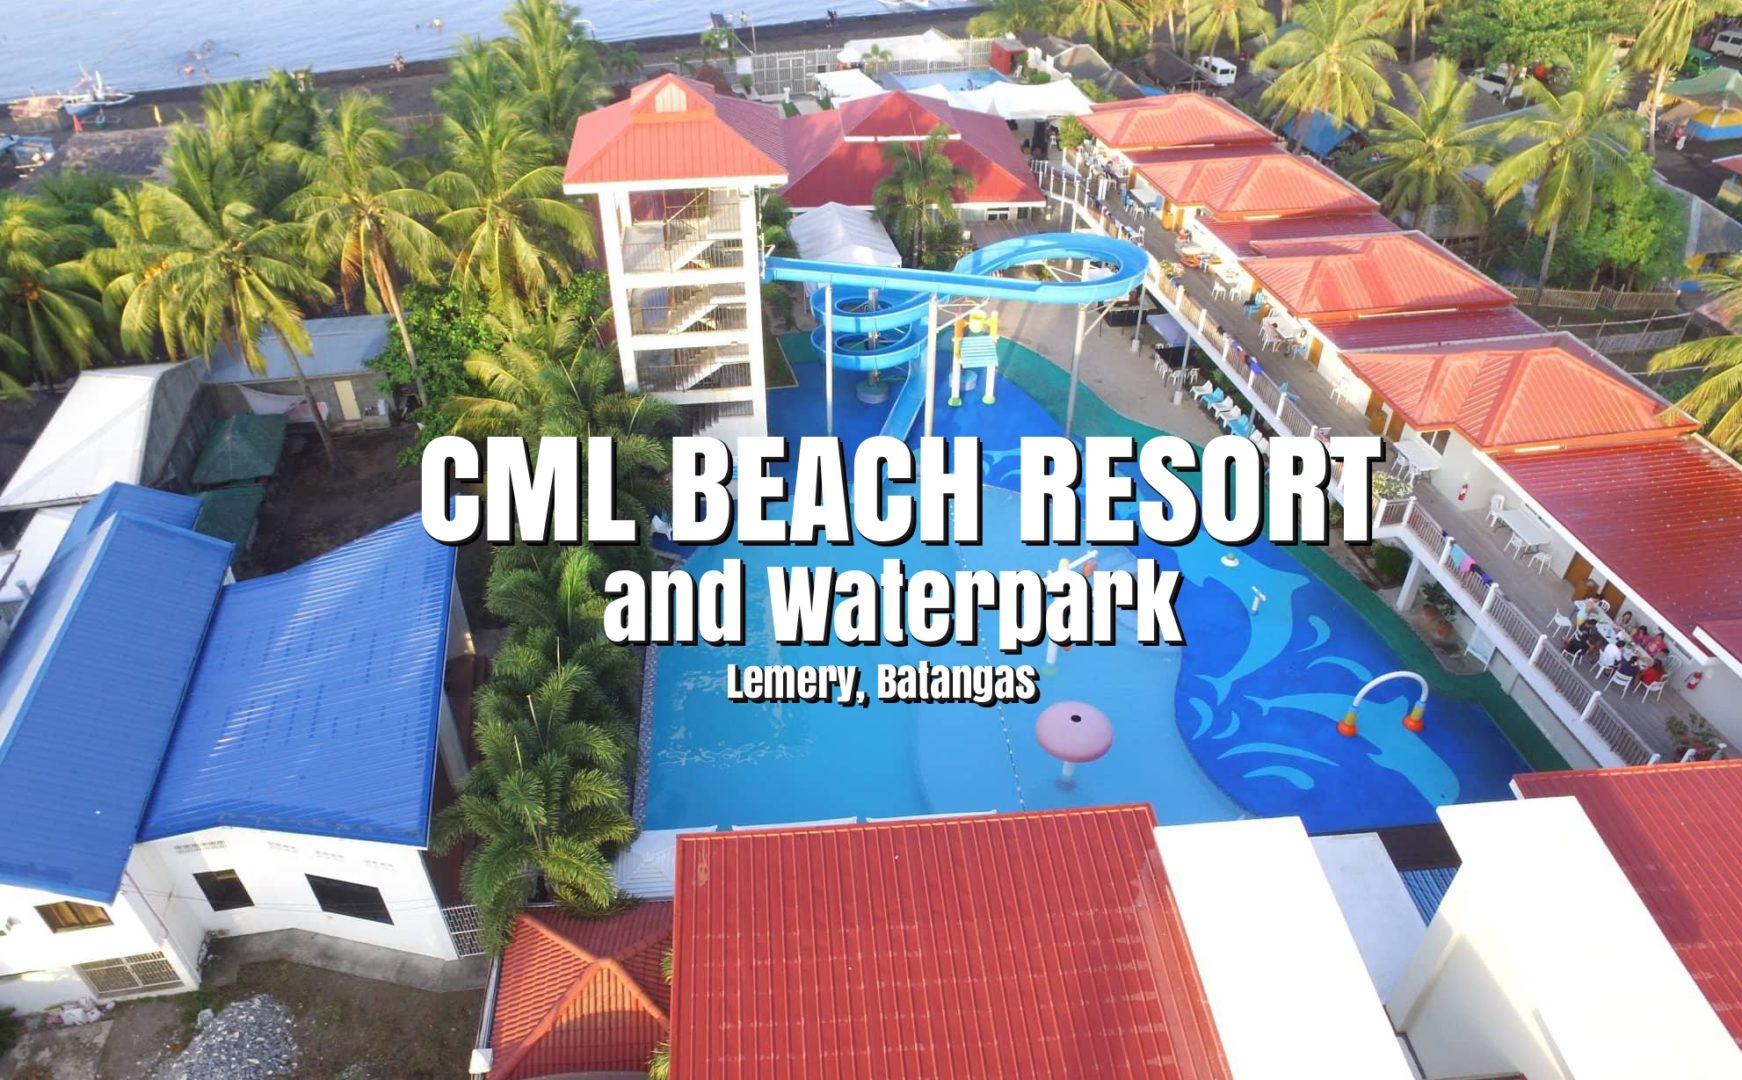 CML Beach Resort & Waterpark: Savoring the last days of summer in Batangas